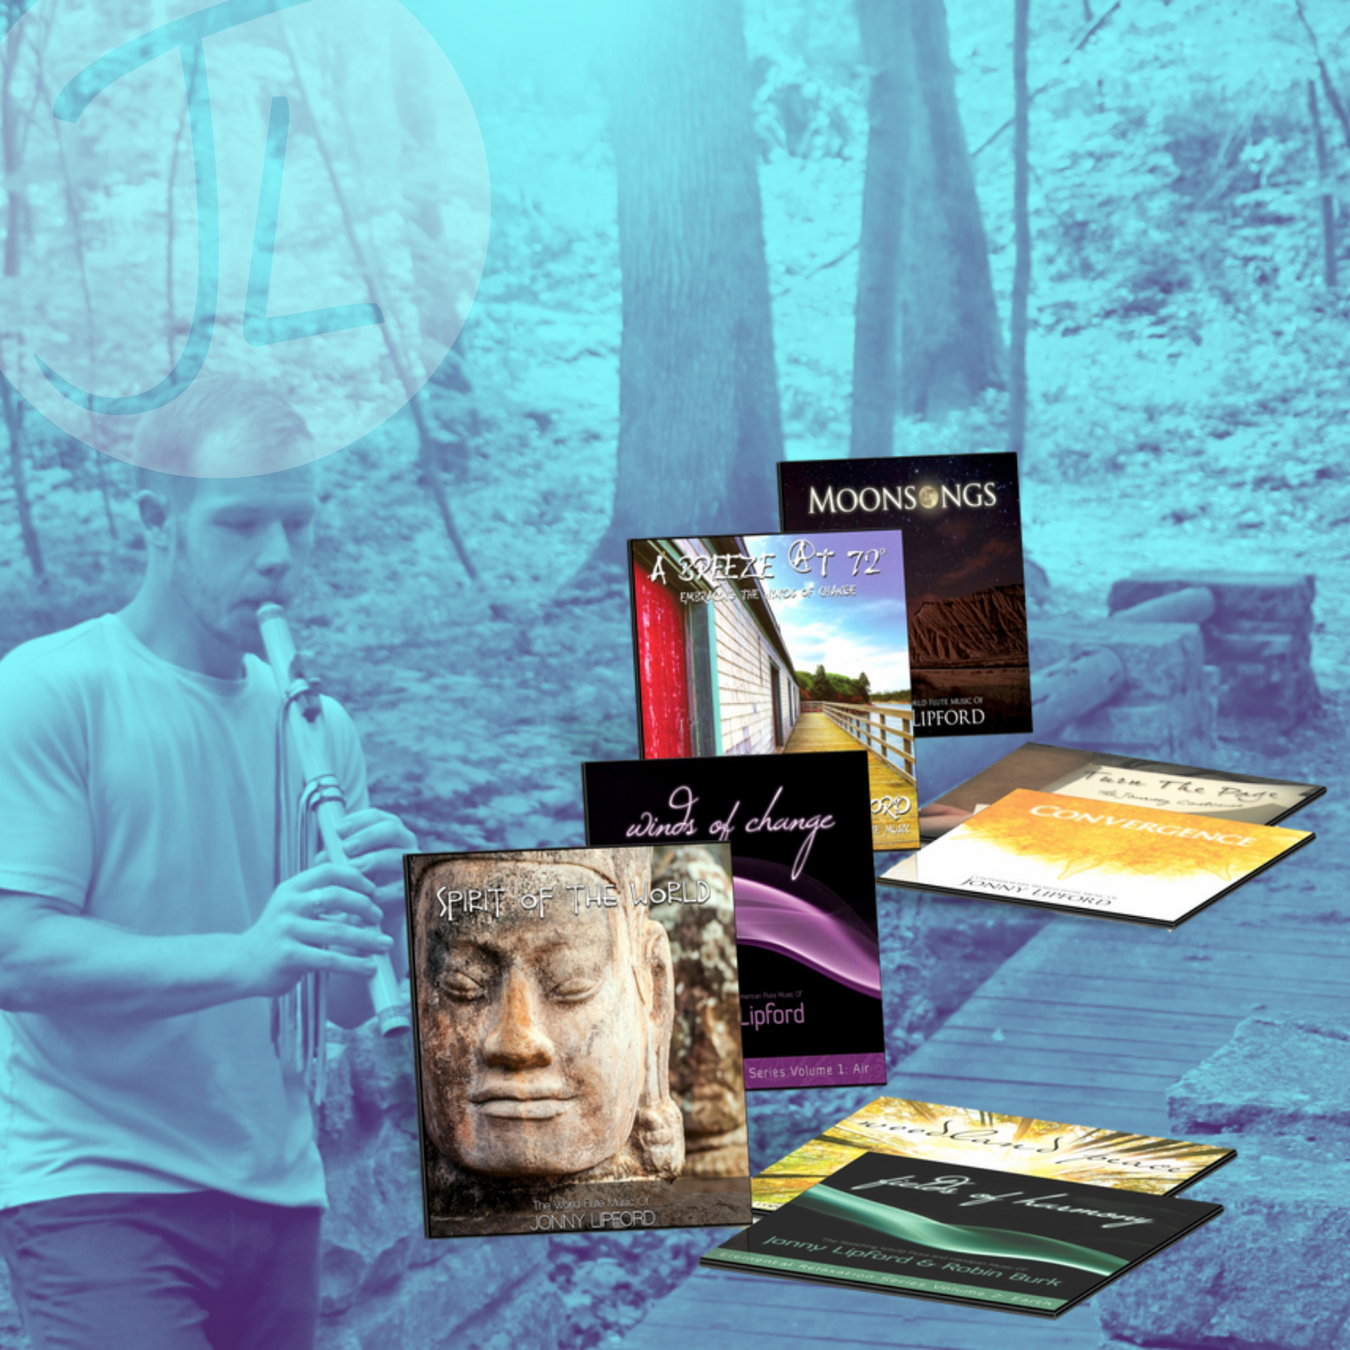 Native American flute music CDs and digital downloads by award winning Jonny Lipford